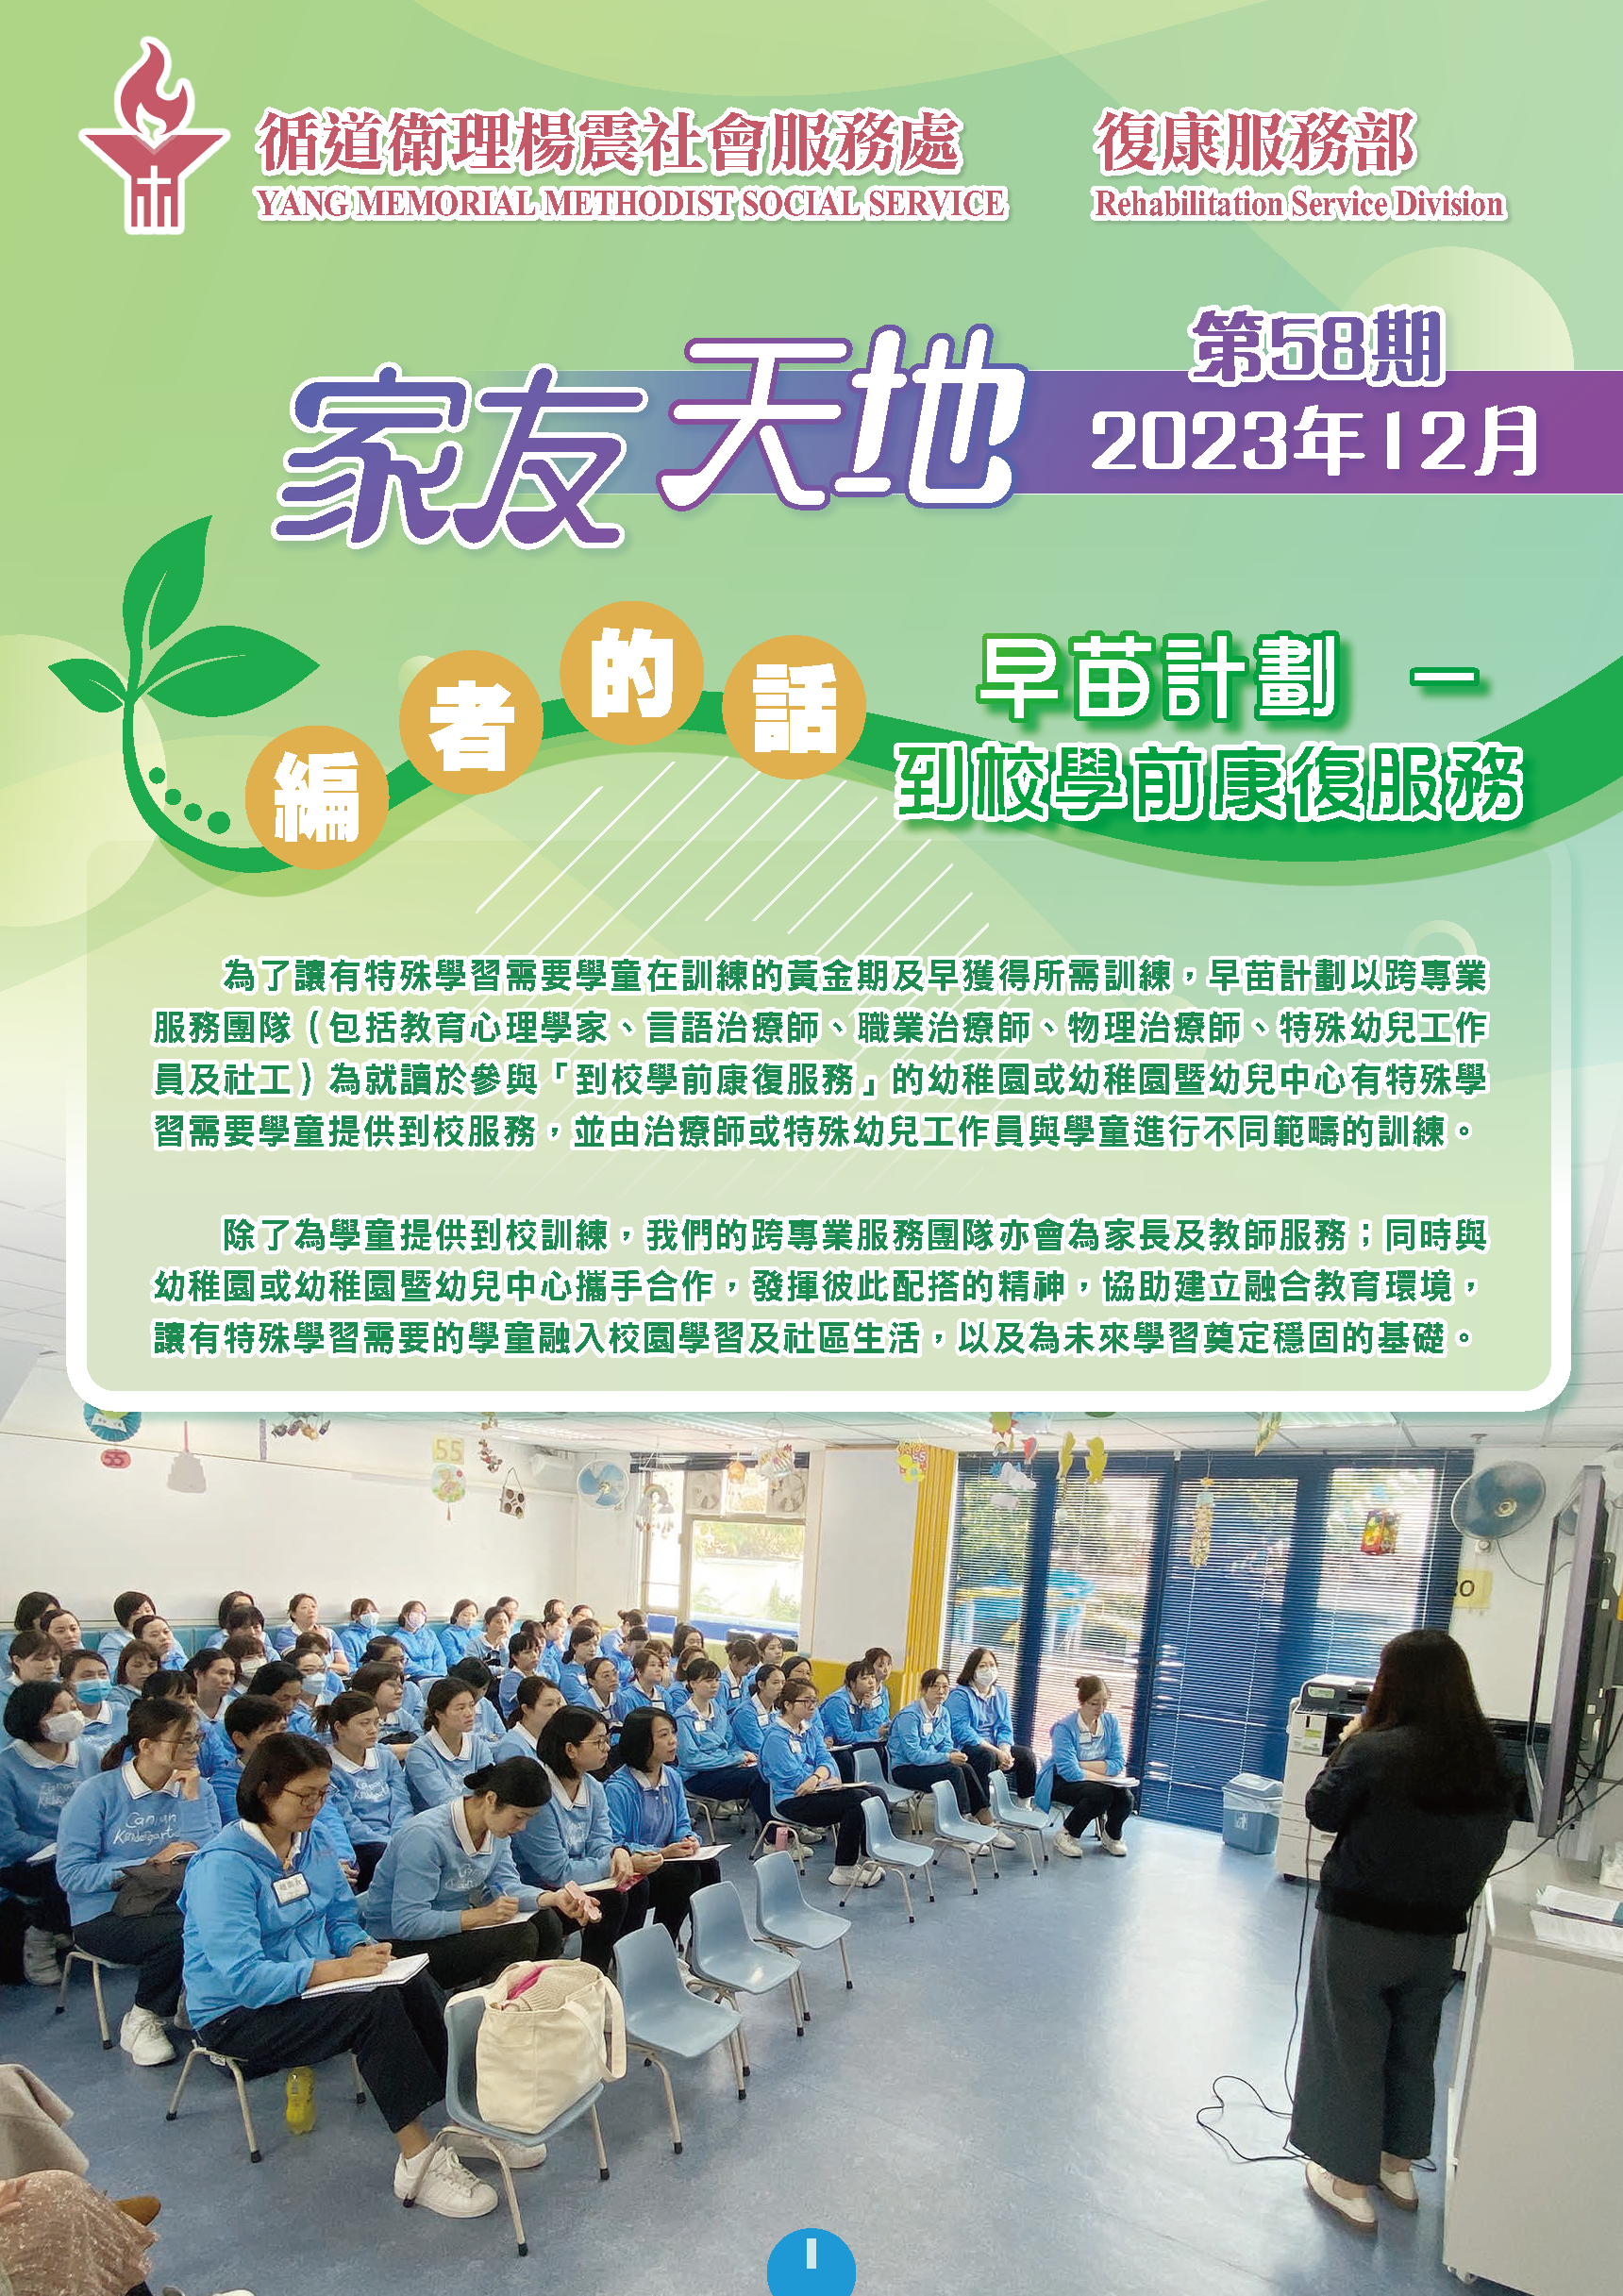 Publications of the Rehabilitation Services「家有天地」